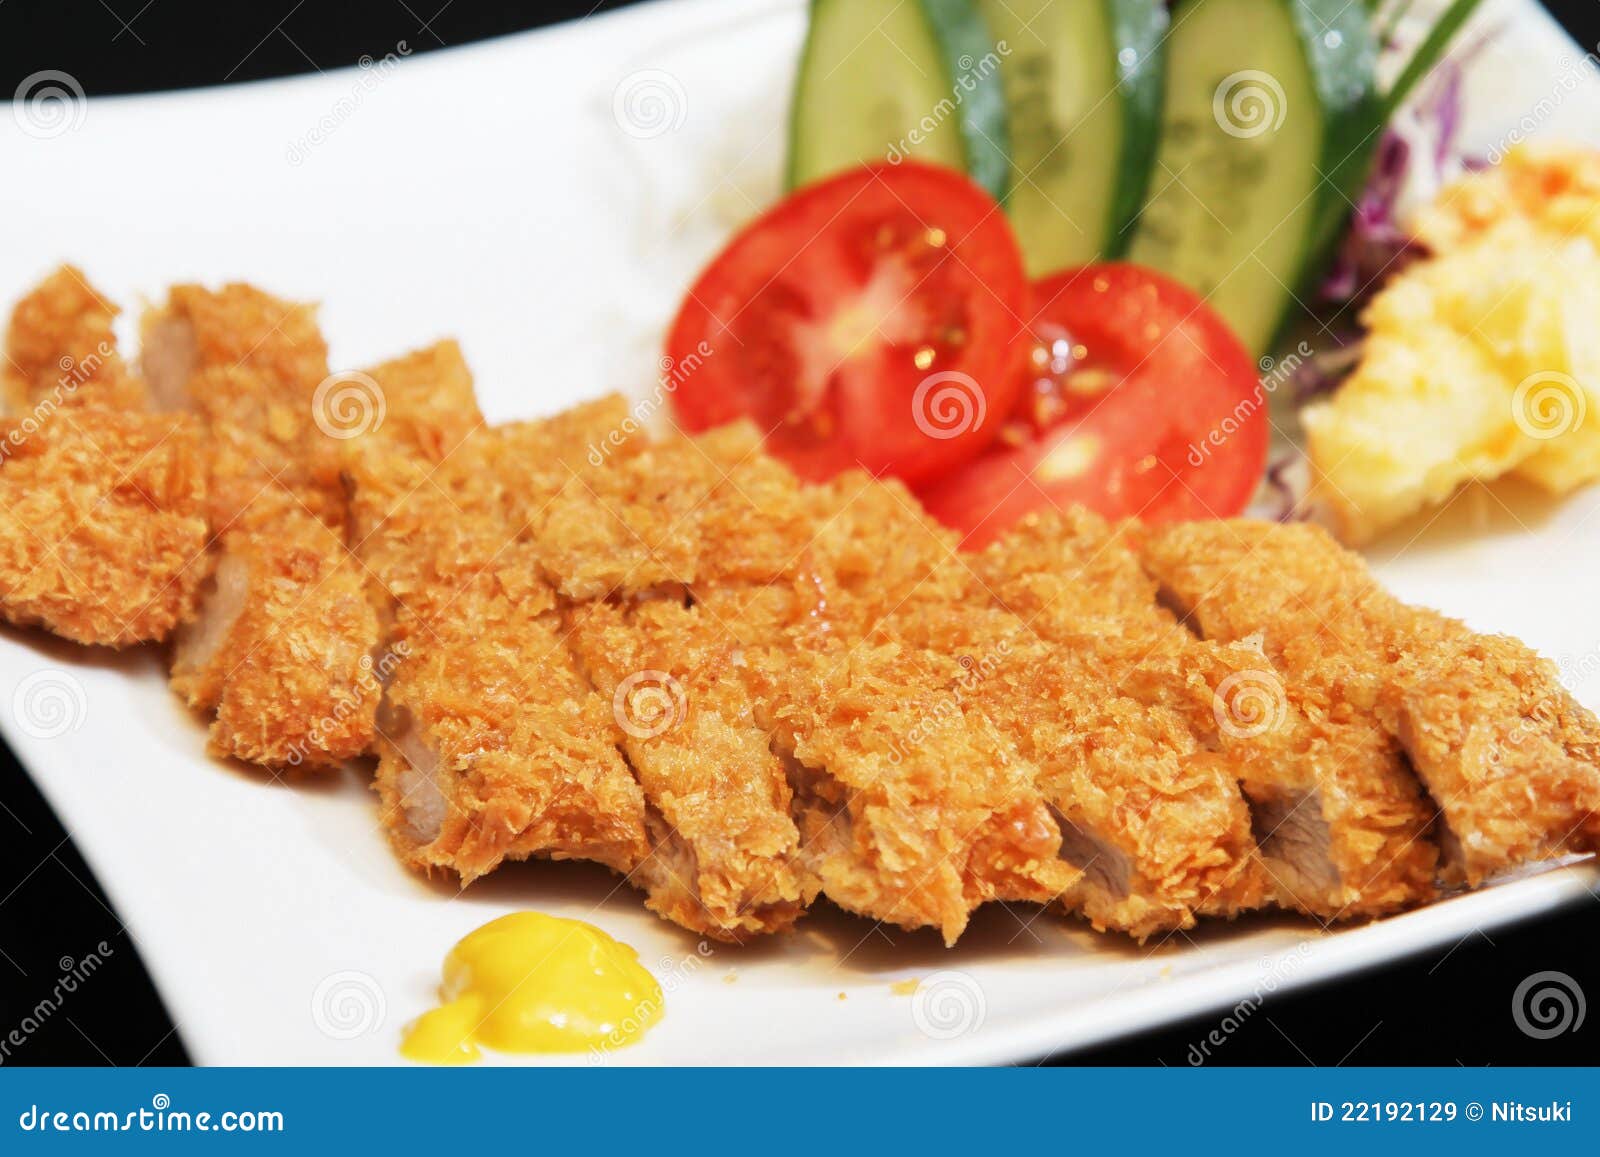 Japanese Fried Pork stock image. Image of beef, dine - 22192129